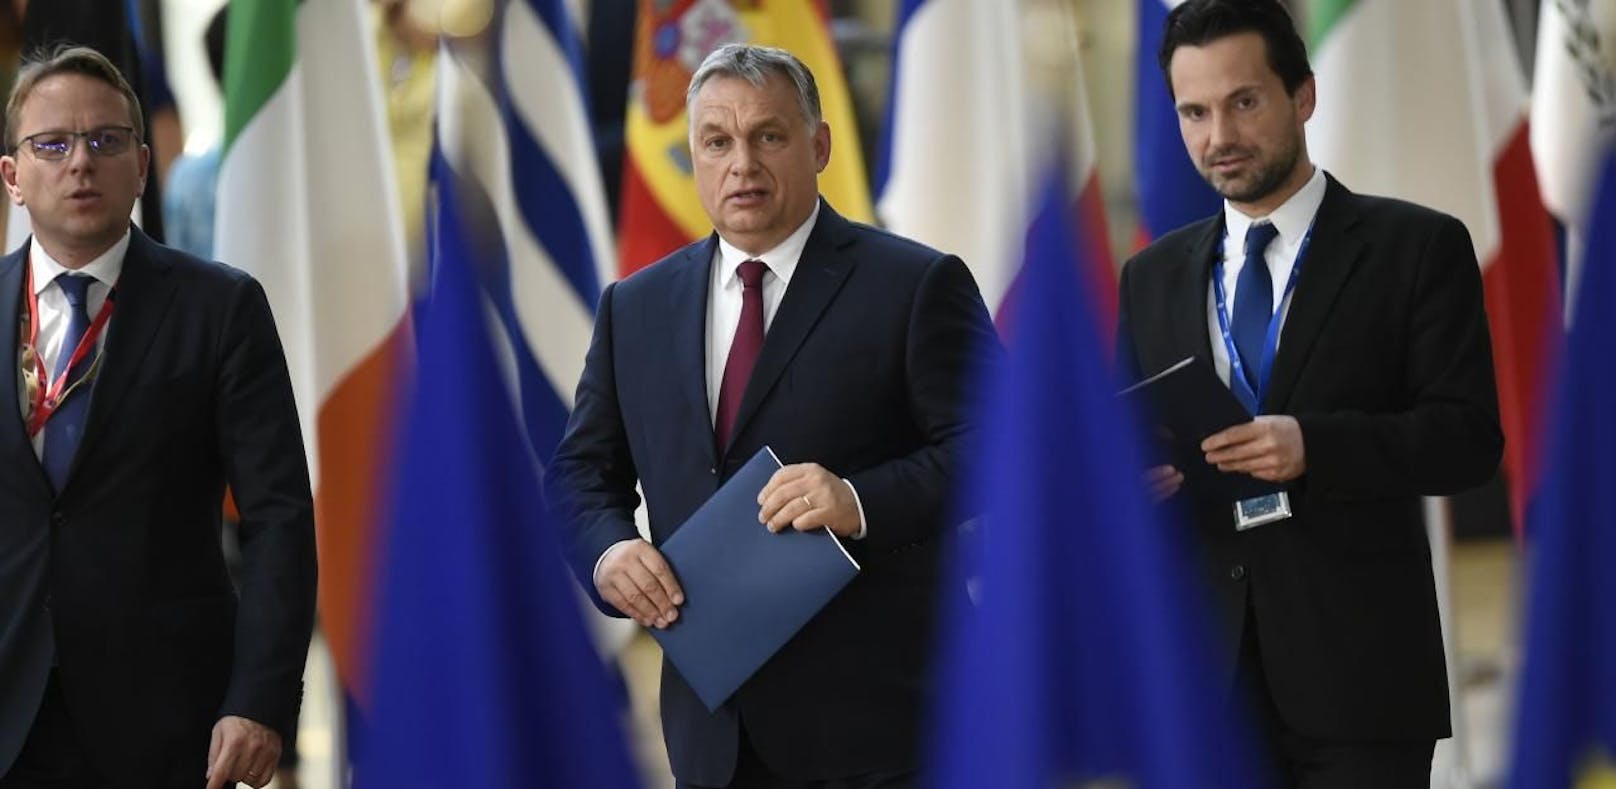 Ungarns Premierminister Viktor Orban